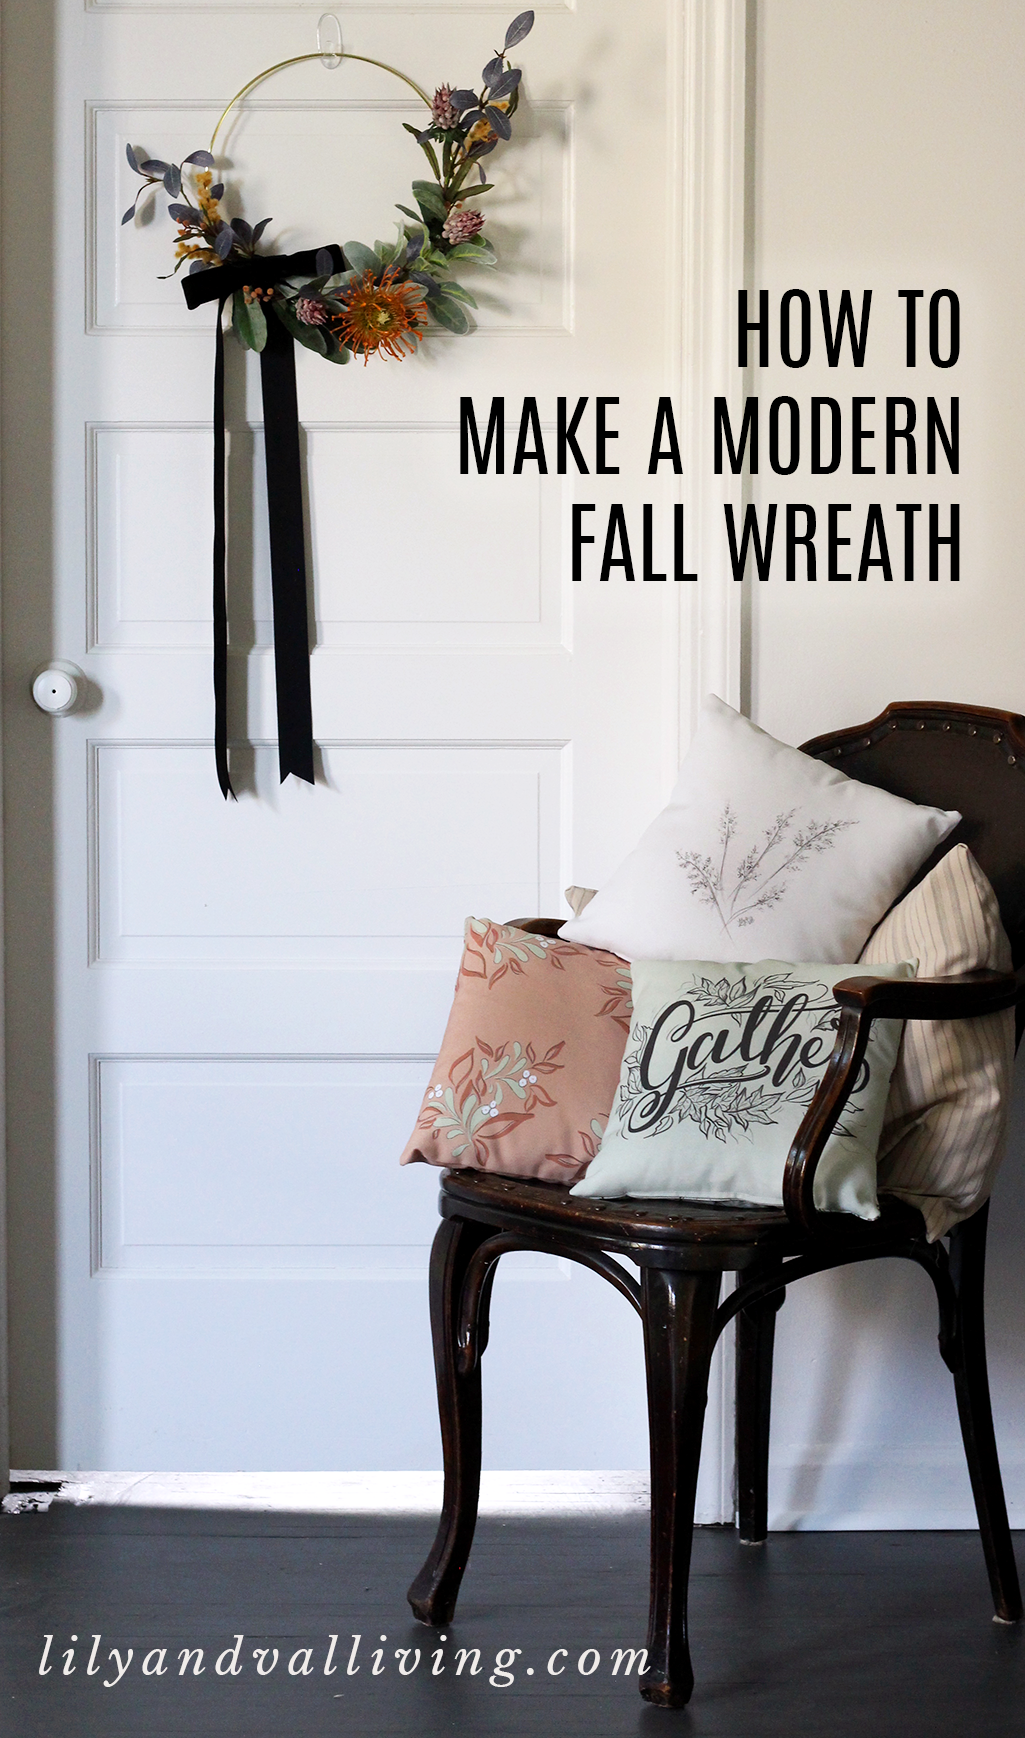 How to Make a modern Fall wreath